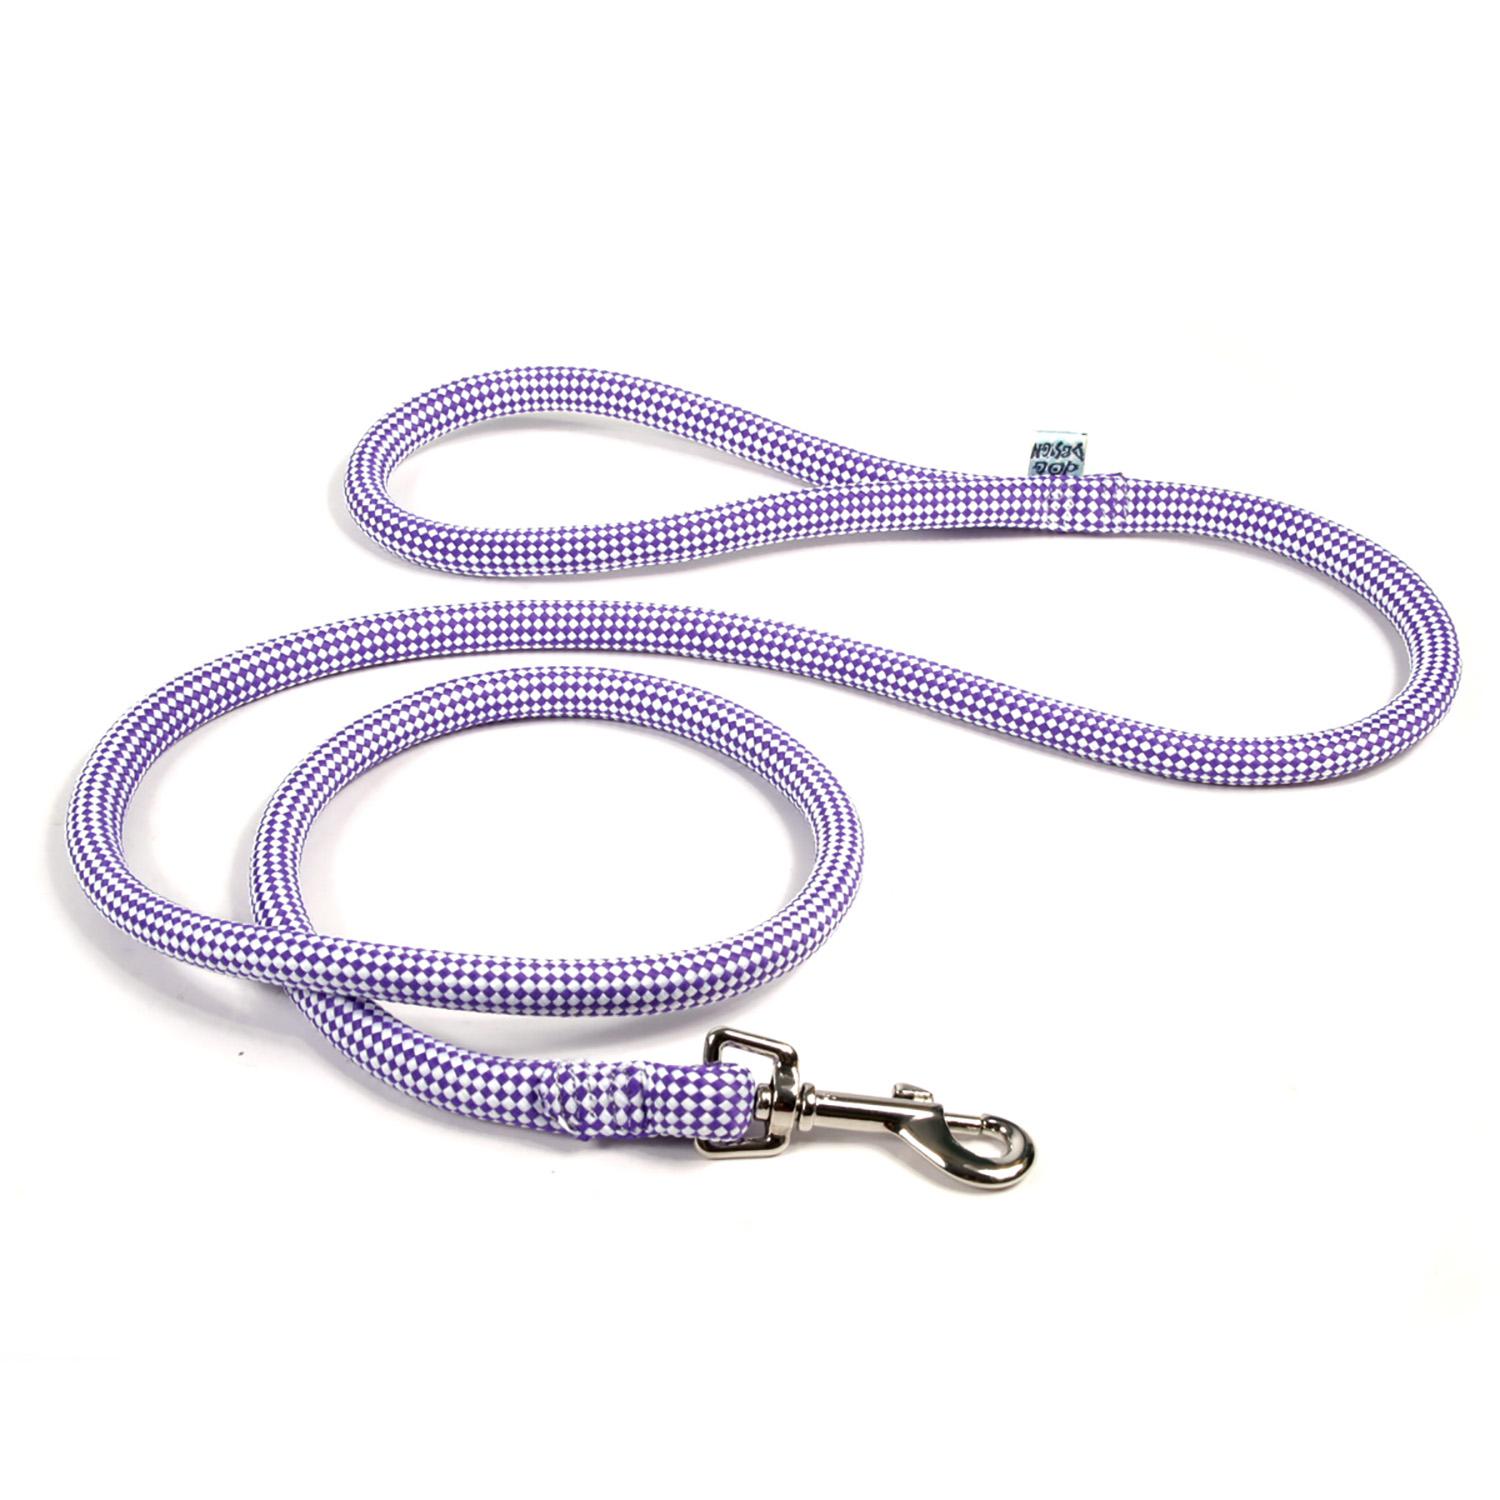 Checkerboard Braided Dog Leash by Yellow Dog - Purple